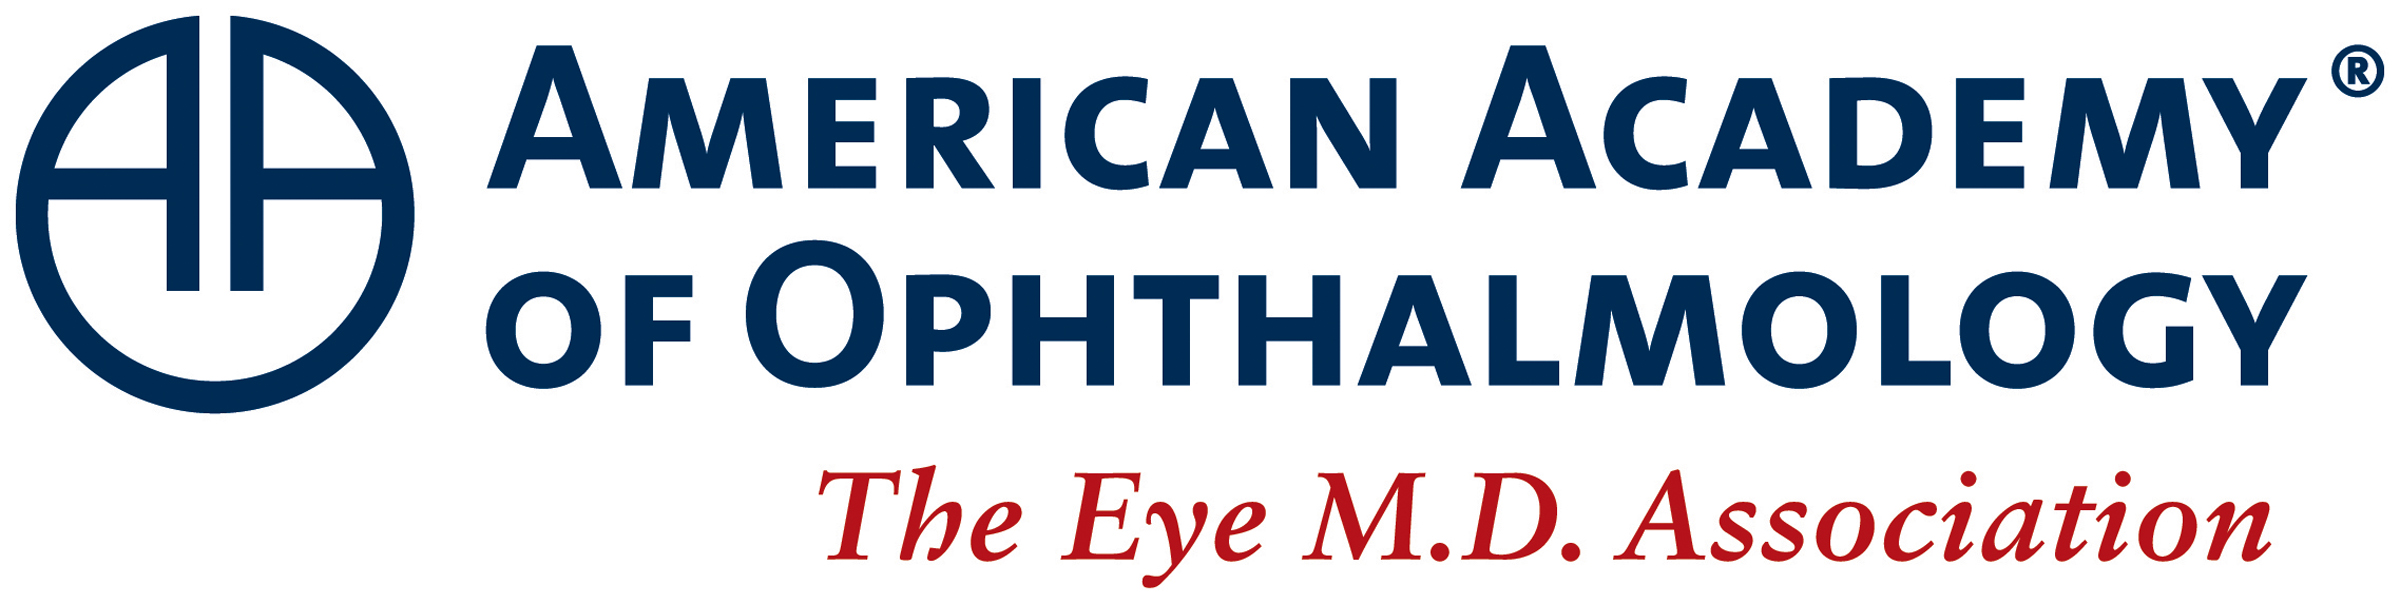 american academy ophthalmology